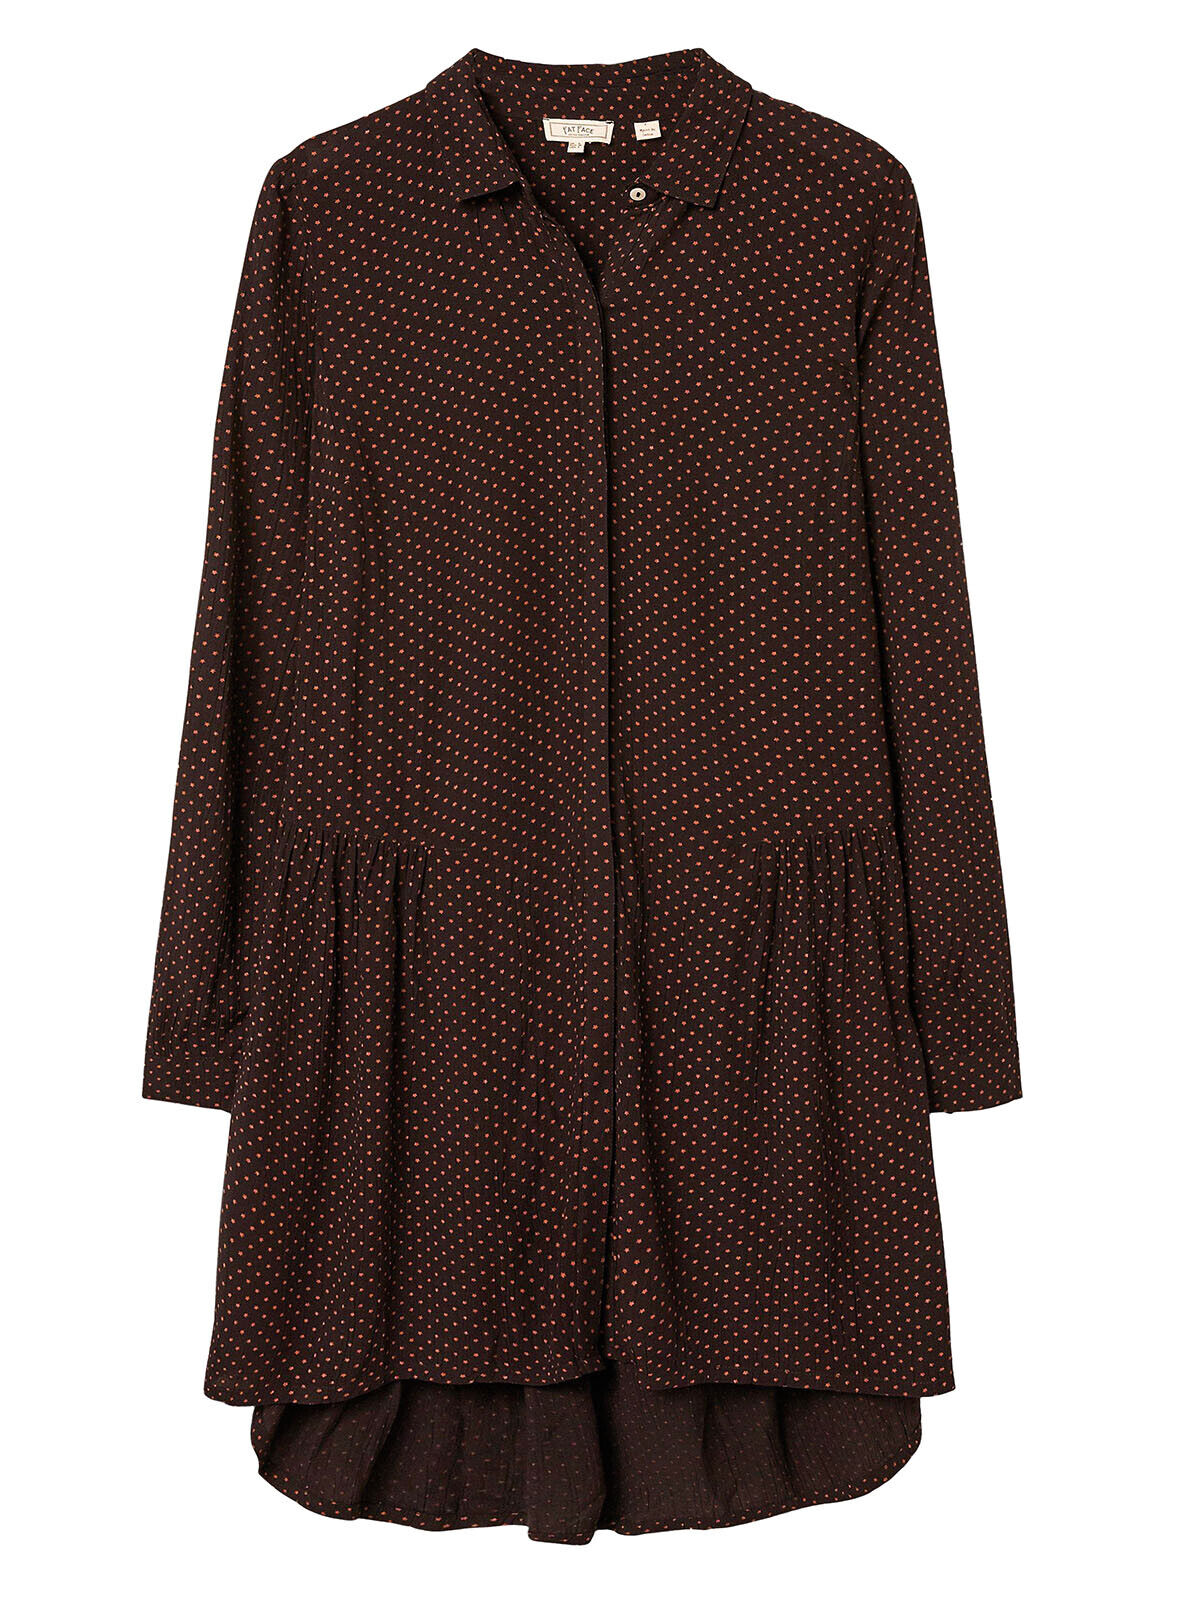 EX Fat Face Black Georgie Micro Star Shirt Dress 12, 14, 16, 18, 20 RRP £52.50